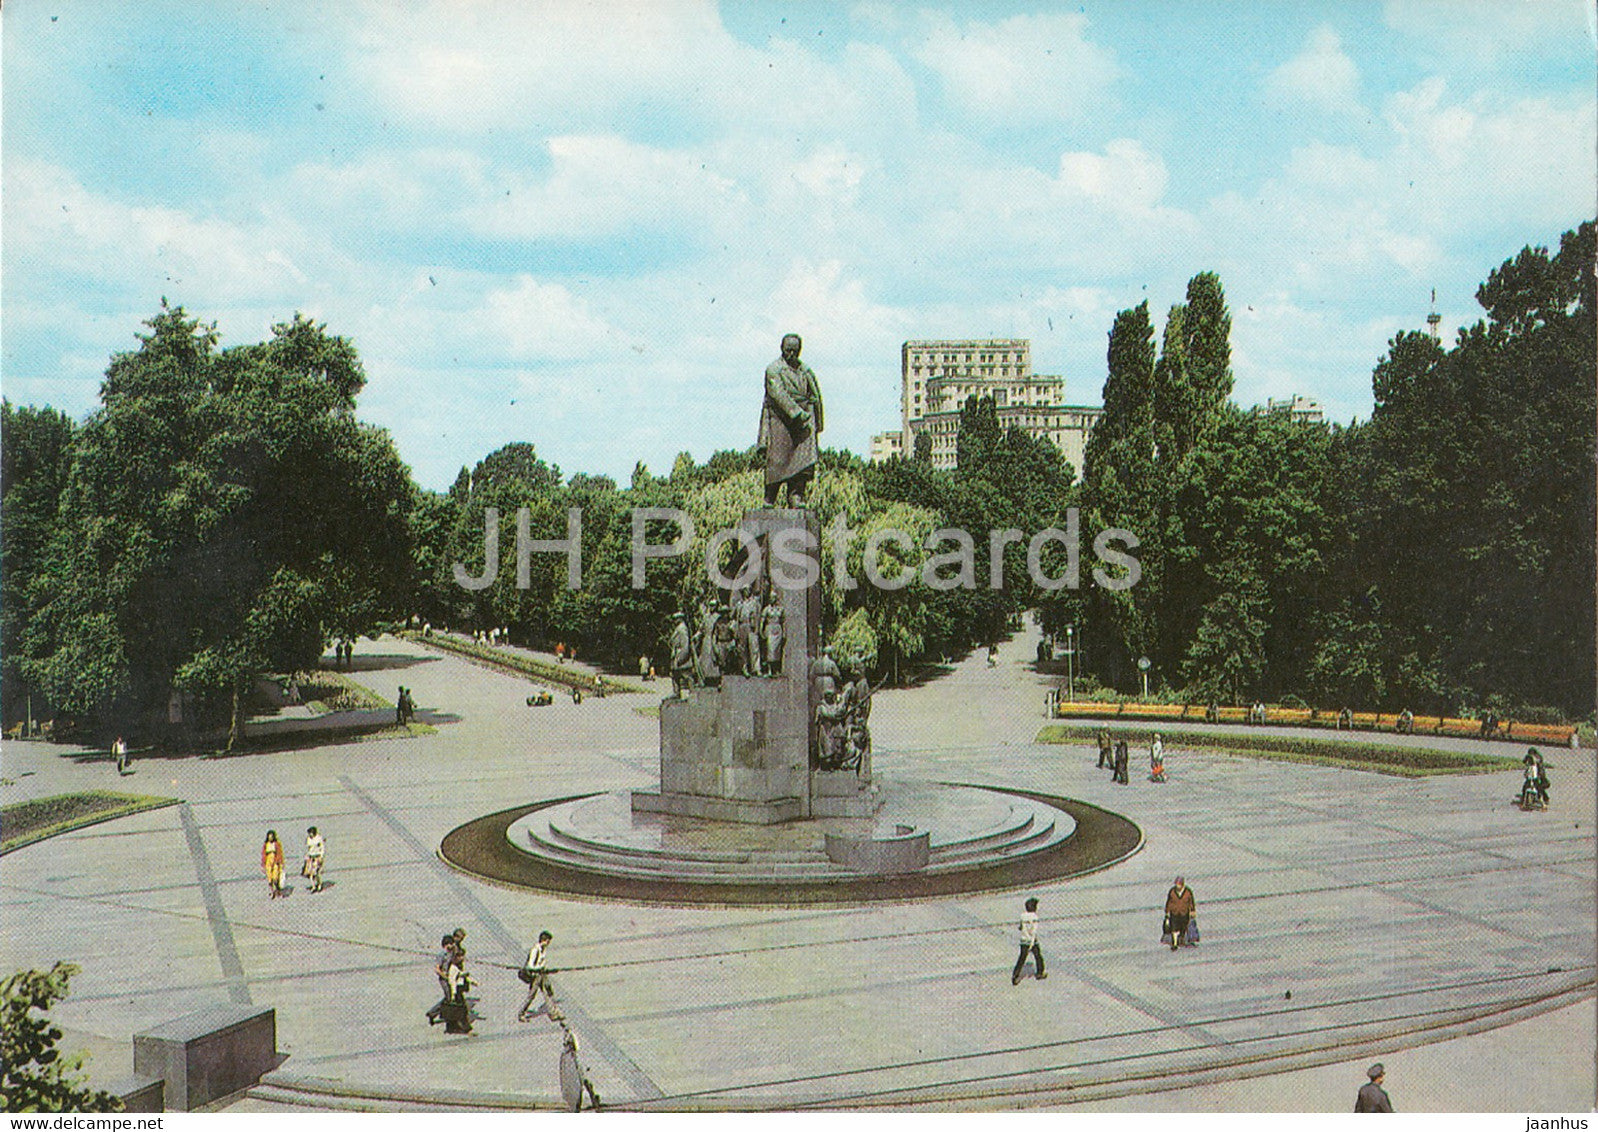 Kharkiv - Kharkov - monument to Ukrainian poet Shevchenko - postal stationery - 1985 - Ukraine USSR - unused - JH Postcards